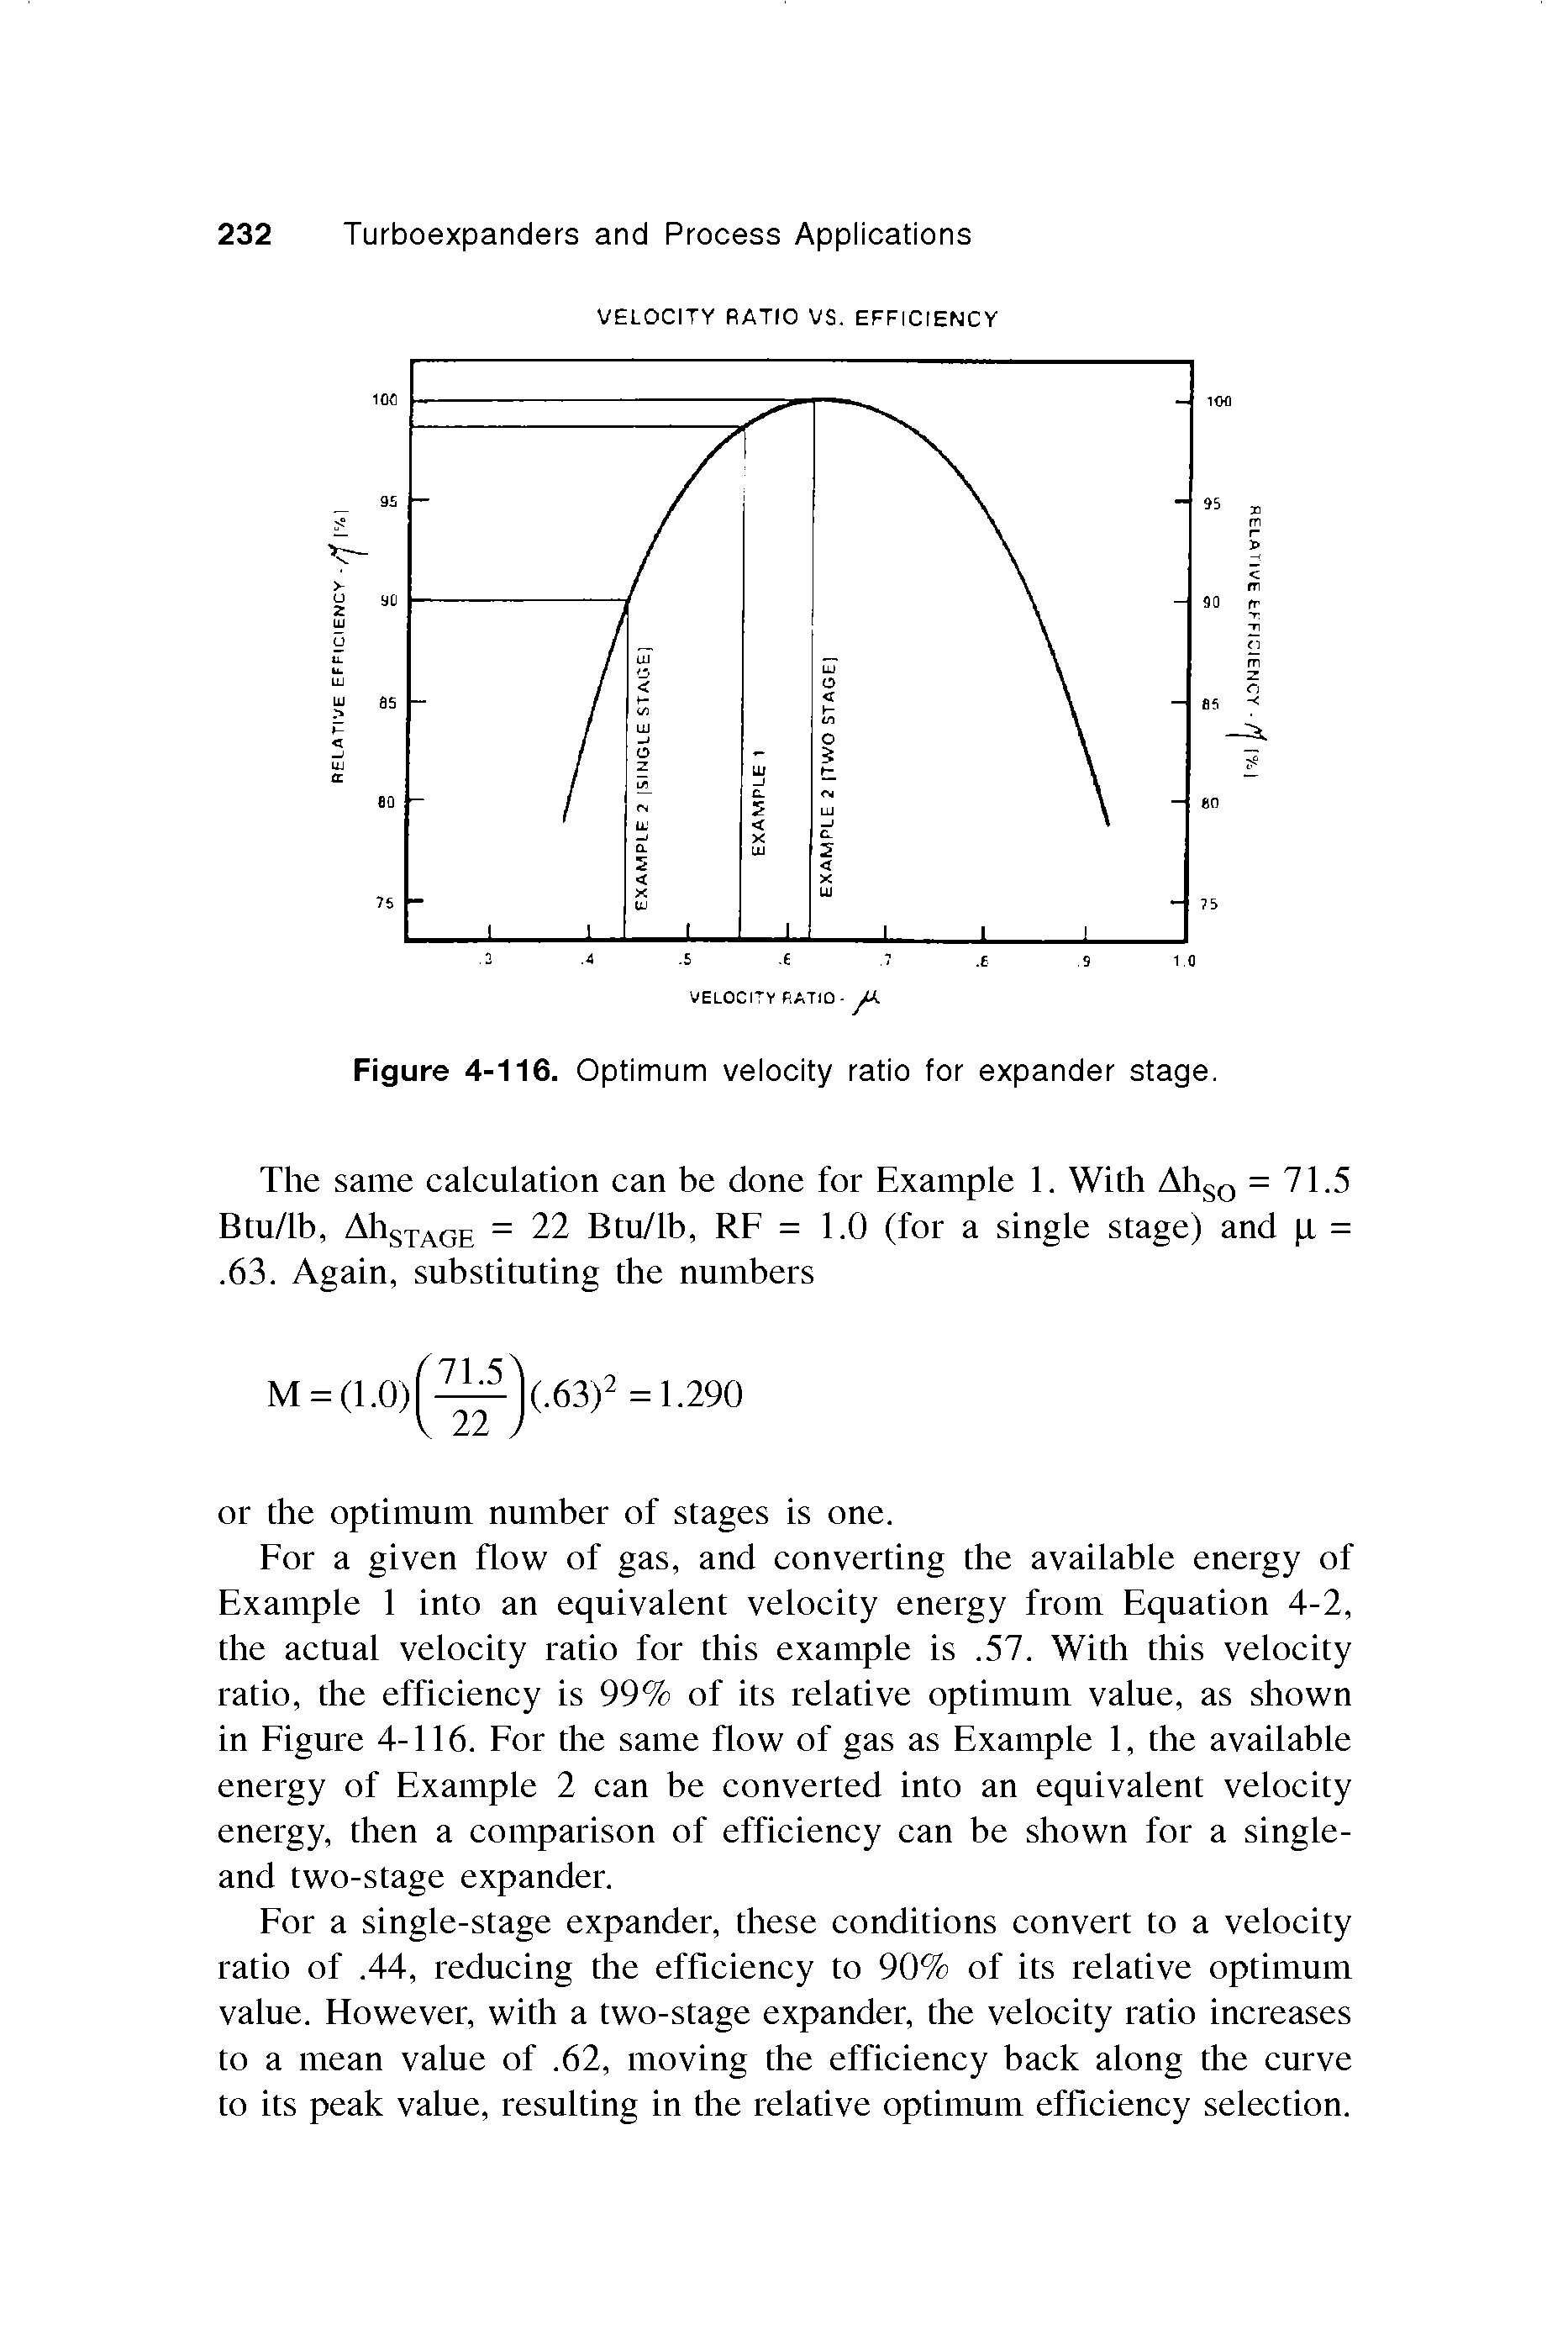 Figure 4-116. Optimum velocity ratio for expander stage.